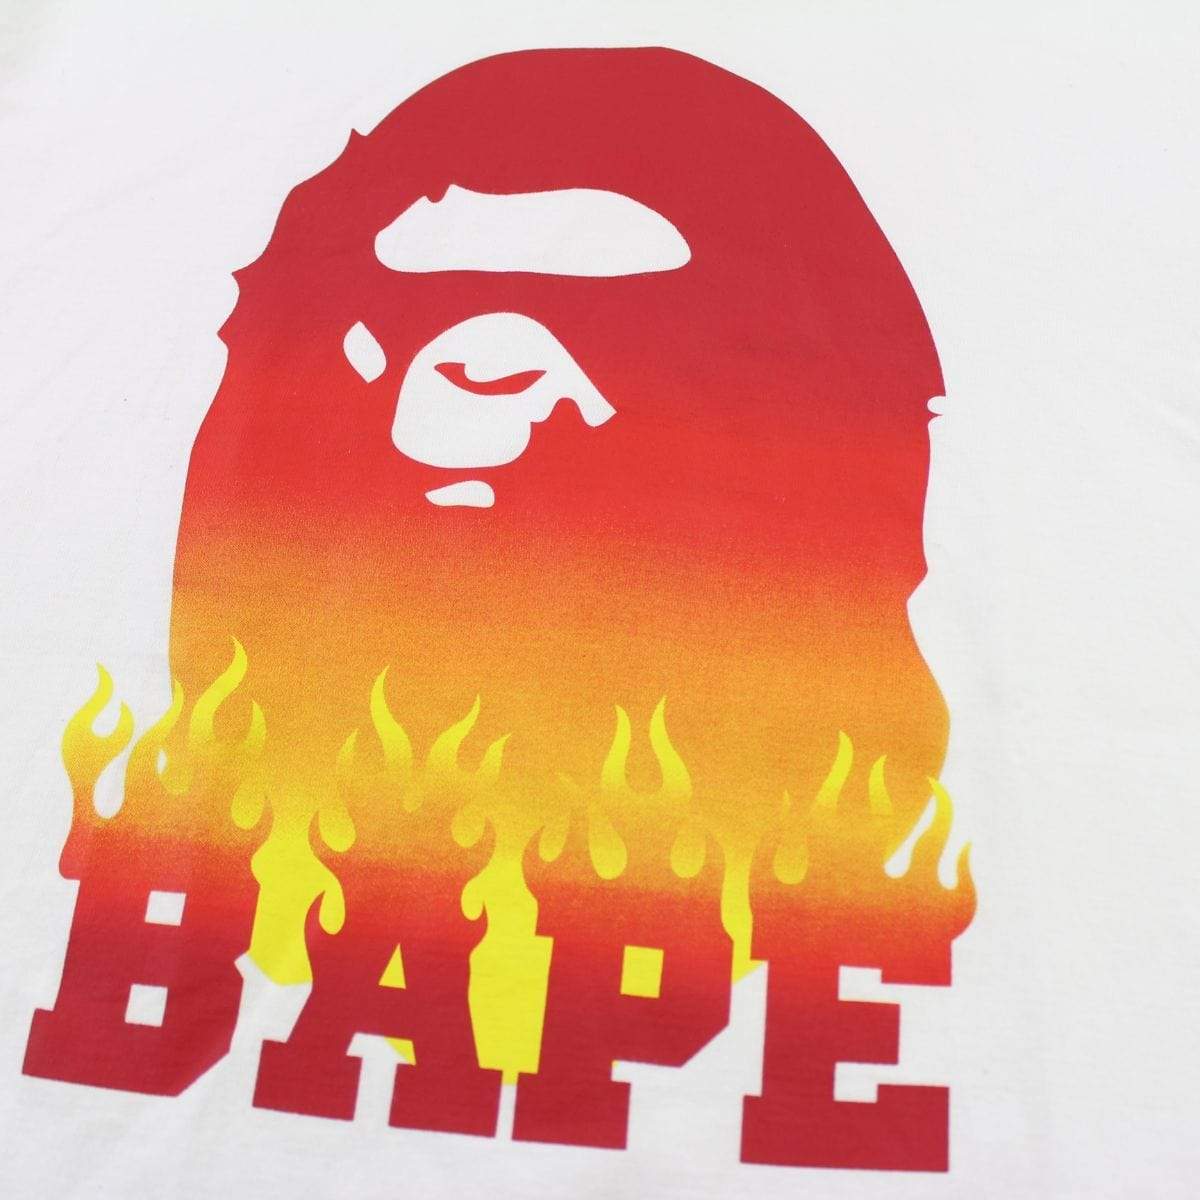 Bape Flame Text Big Ape Logo Tee White - SaruGeneral